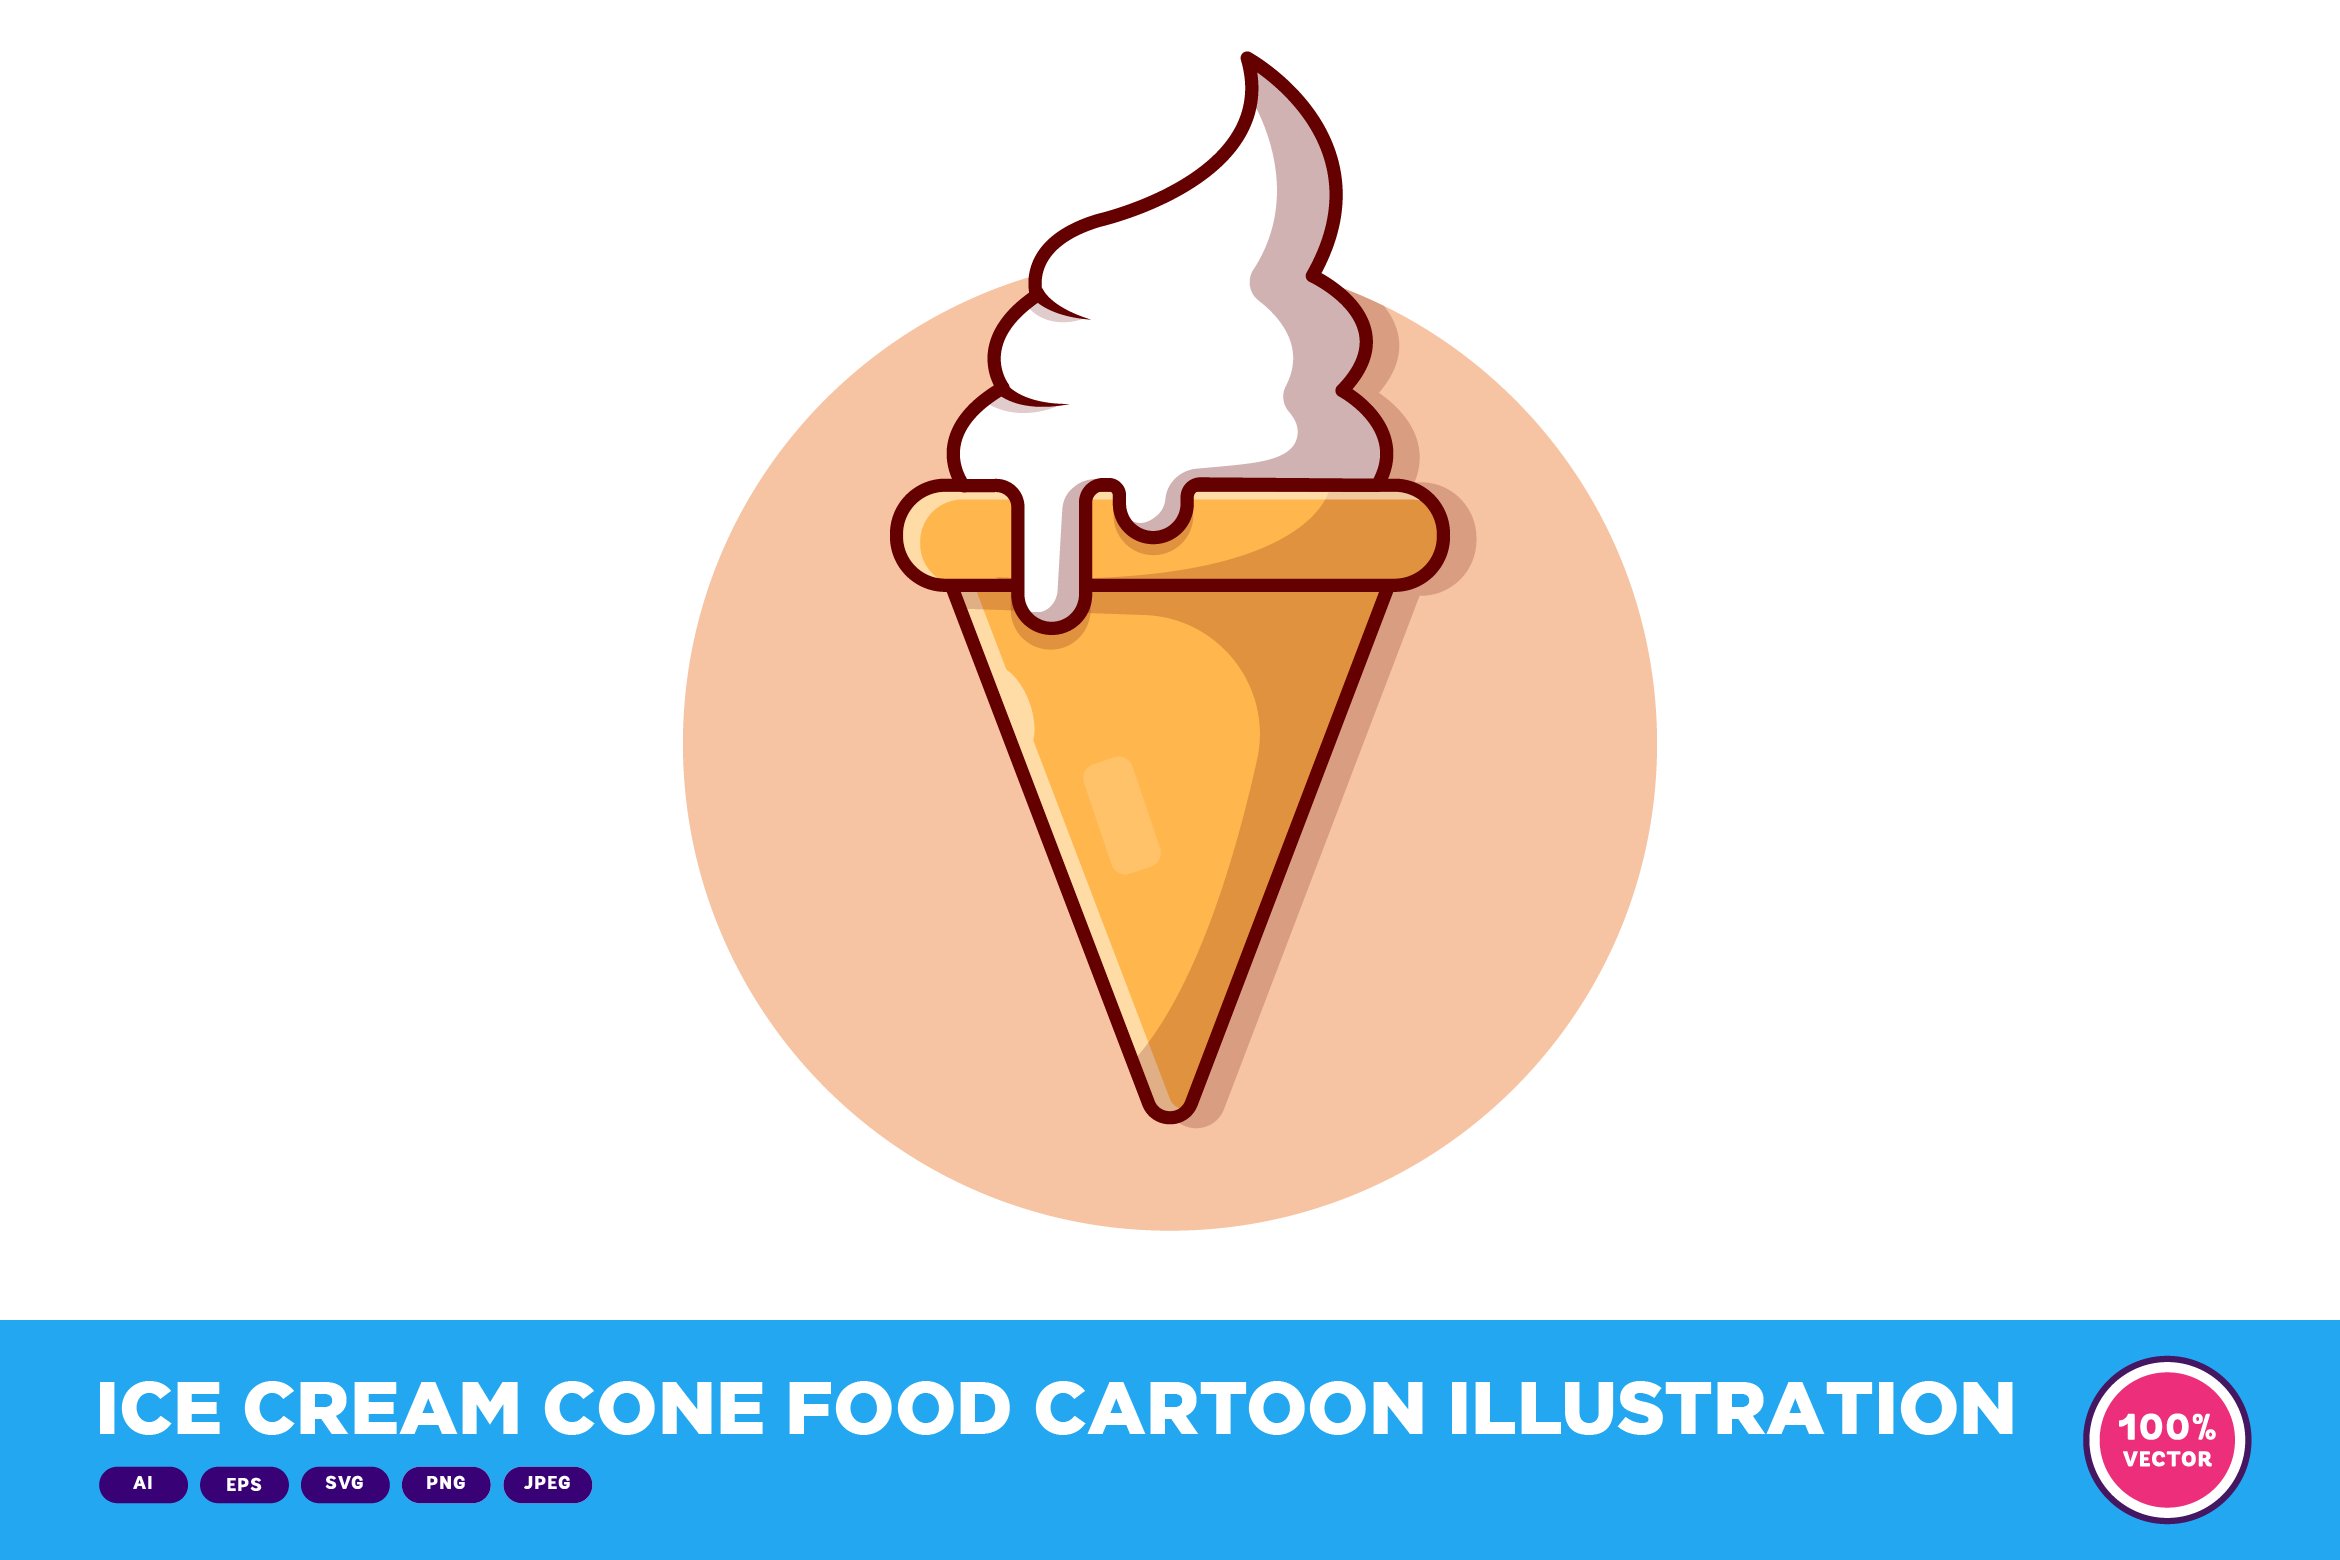 Ice Cream Cone Food Cartoon cover image.